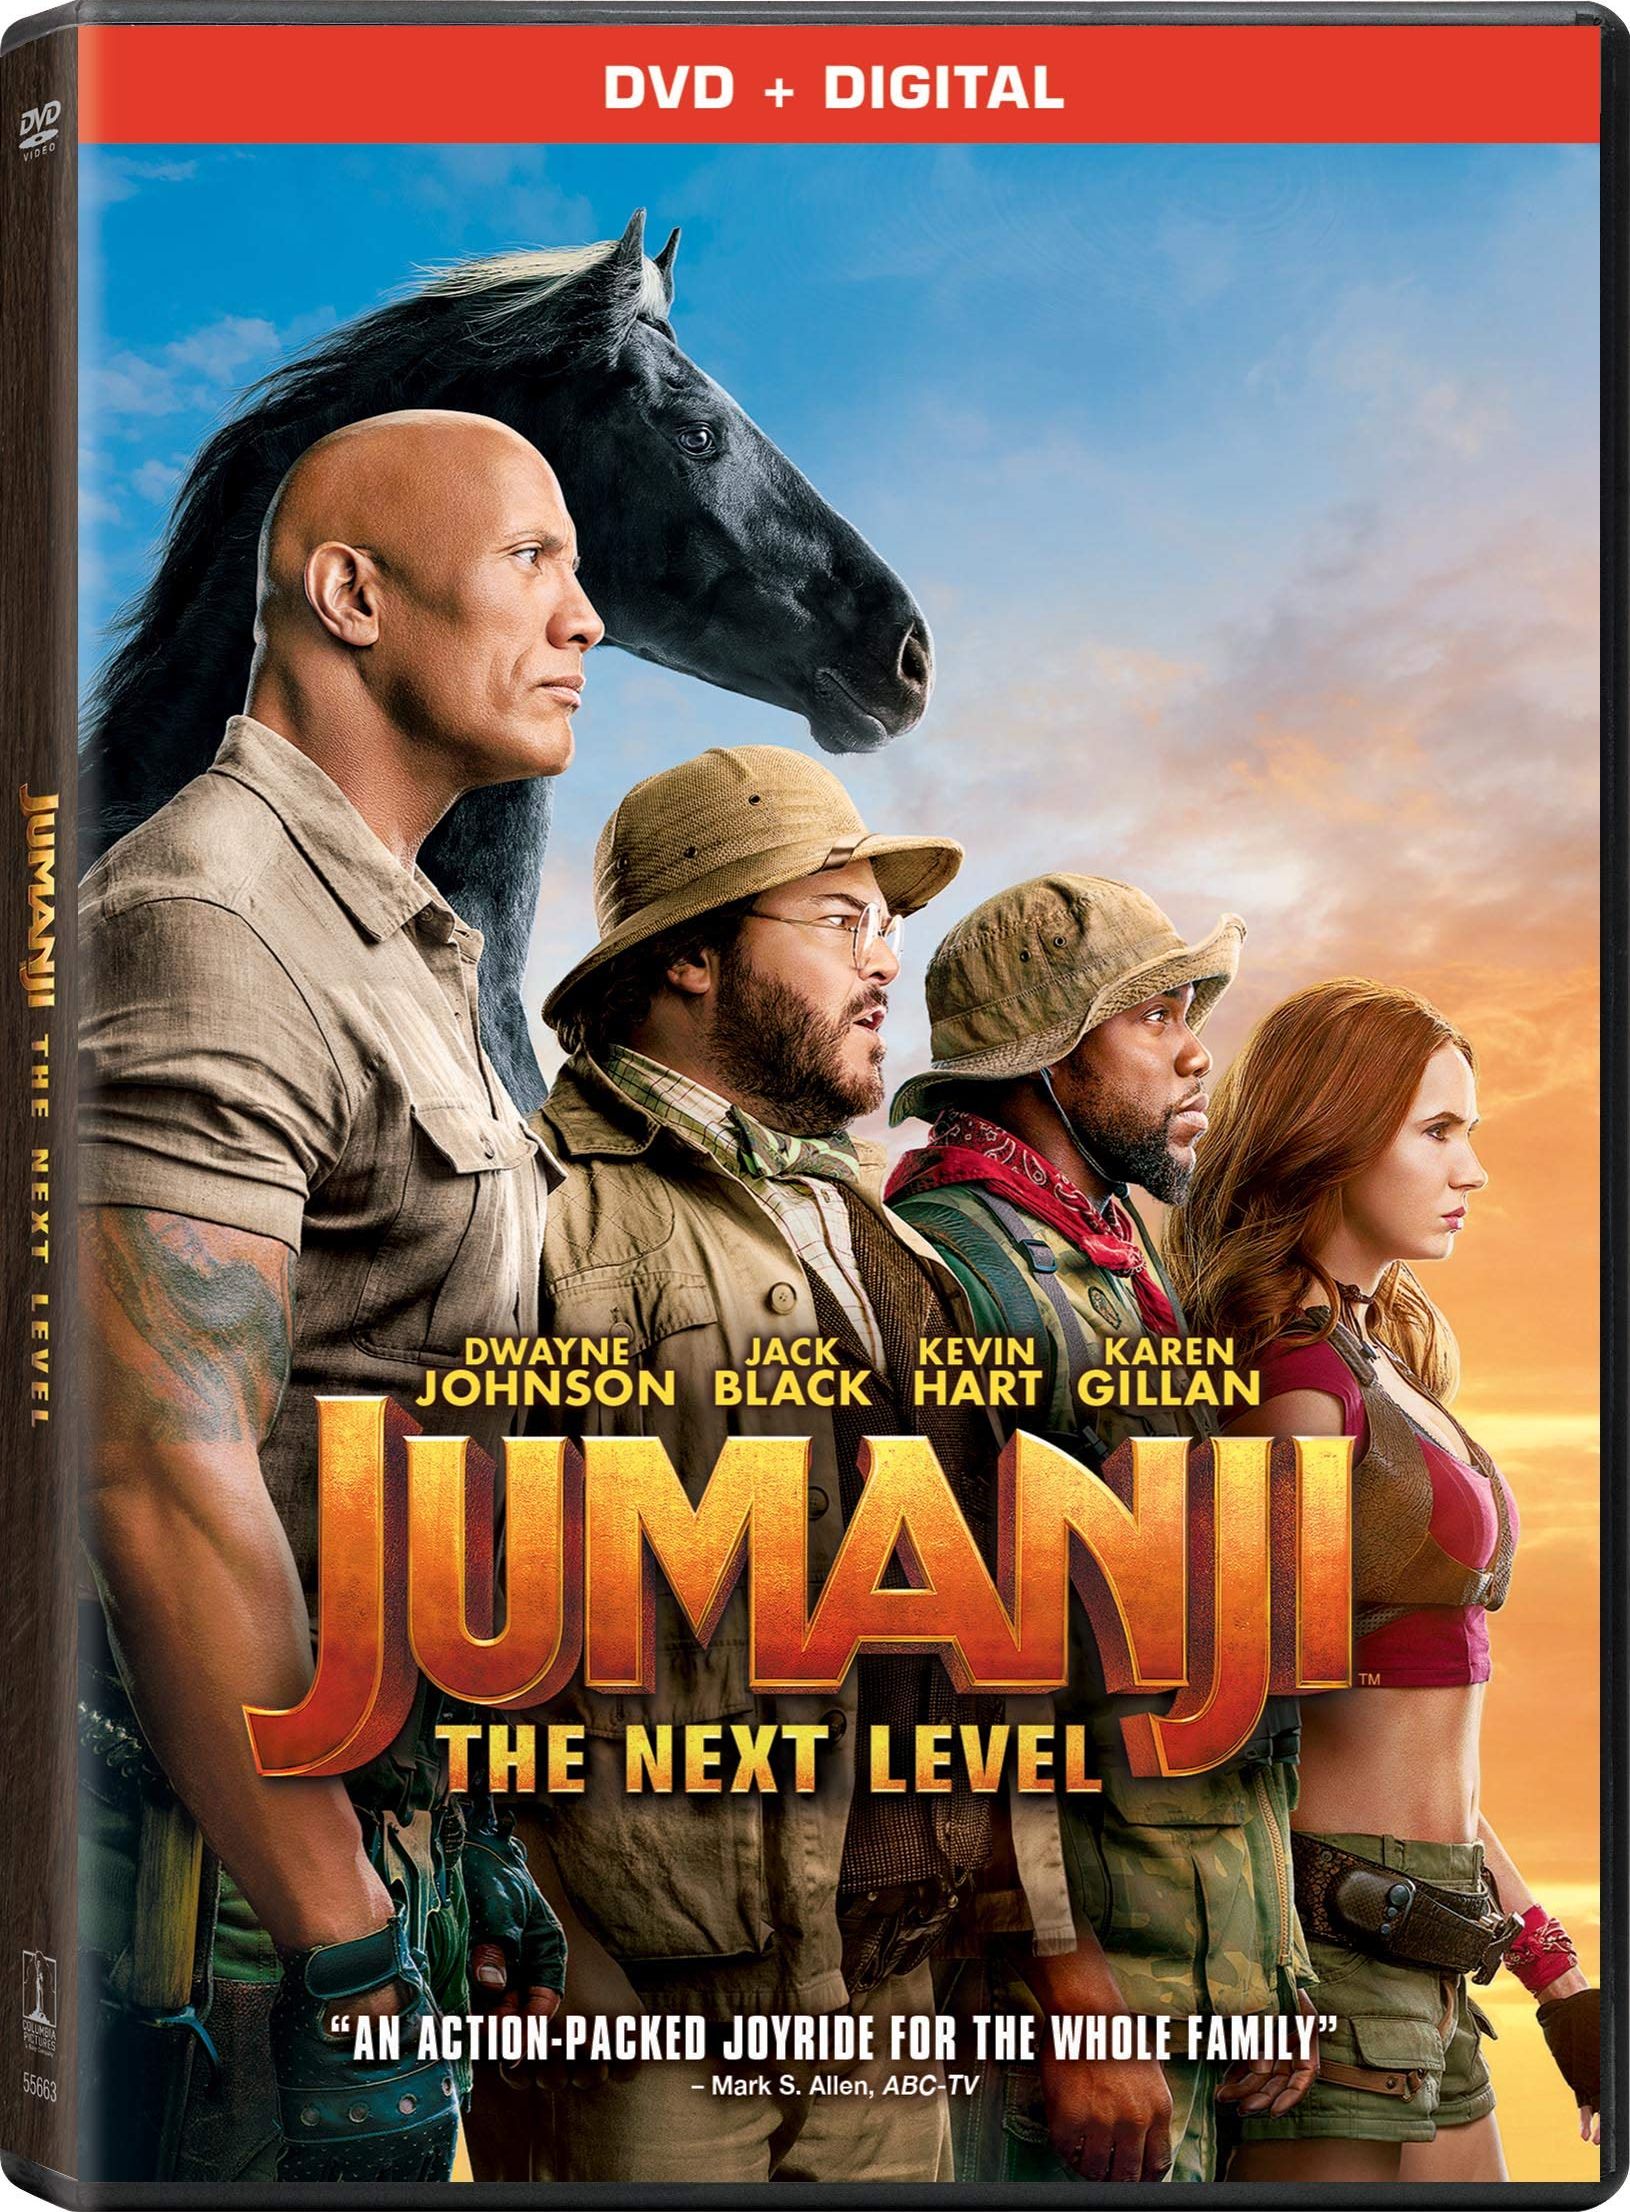 Jumanji The Next Level Dvd Release Date March 17 2020